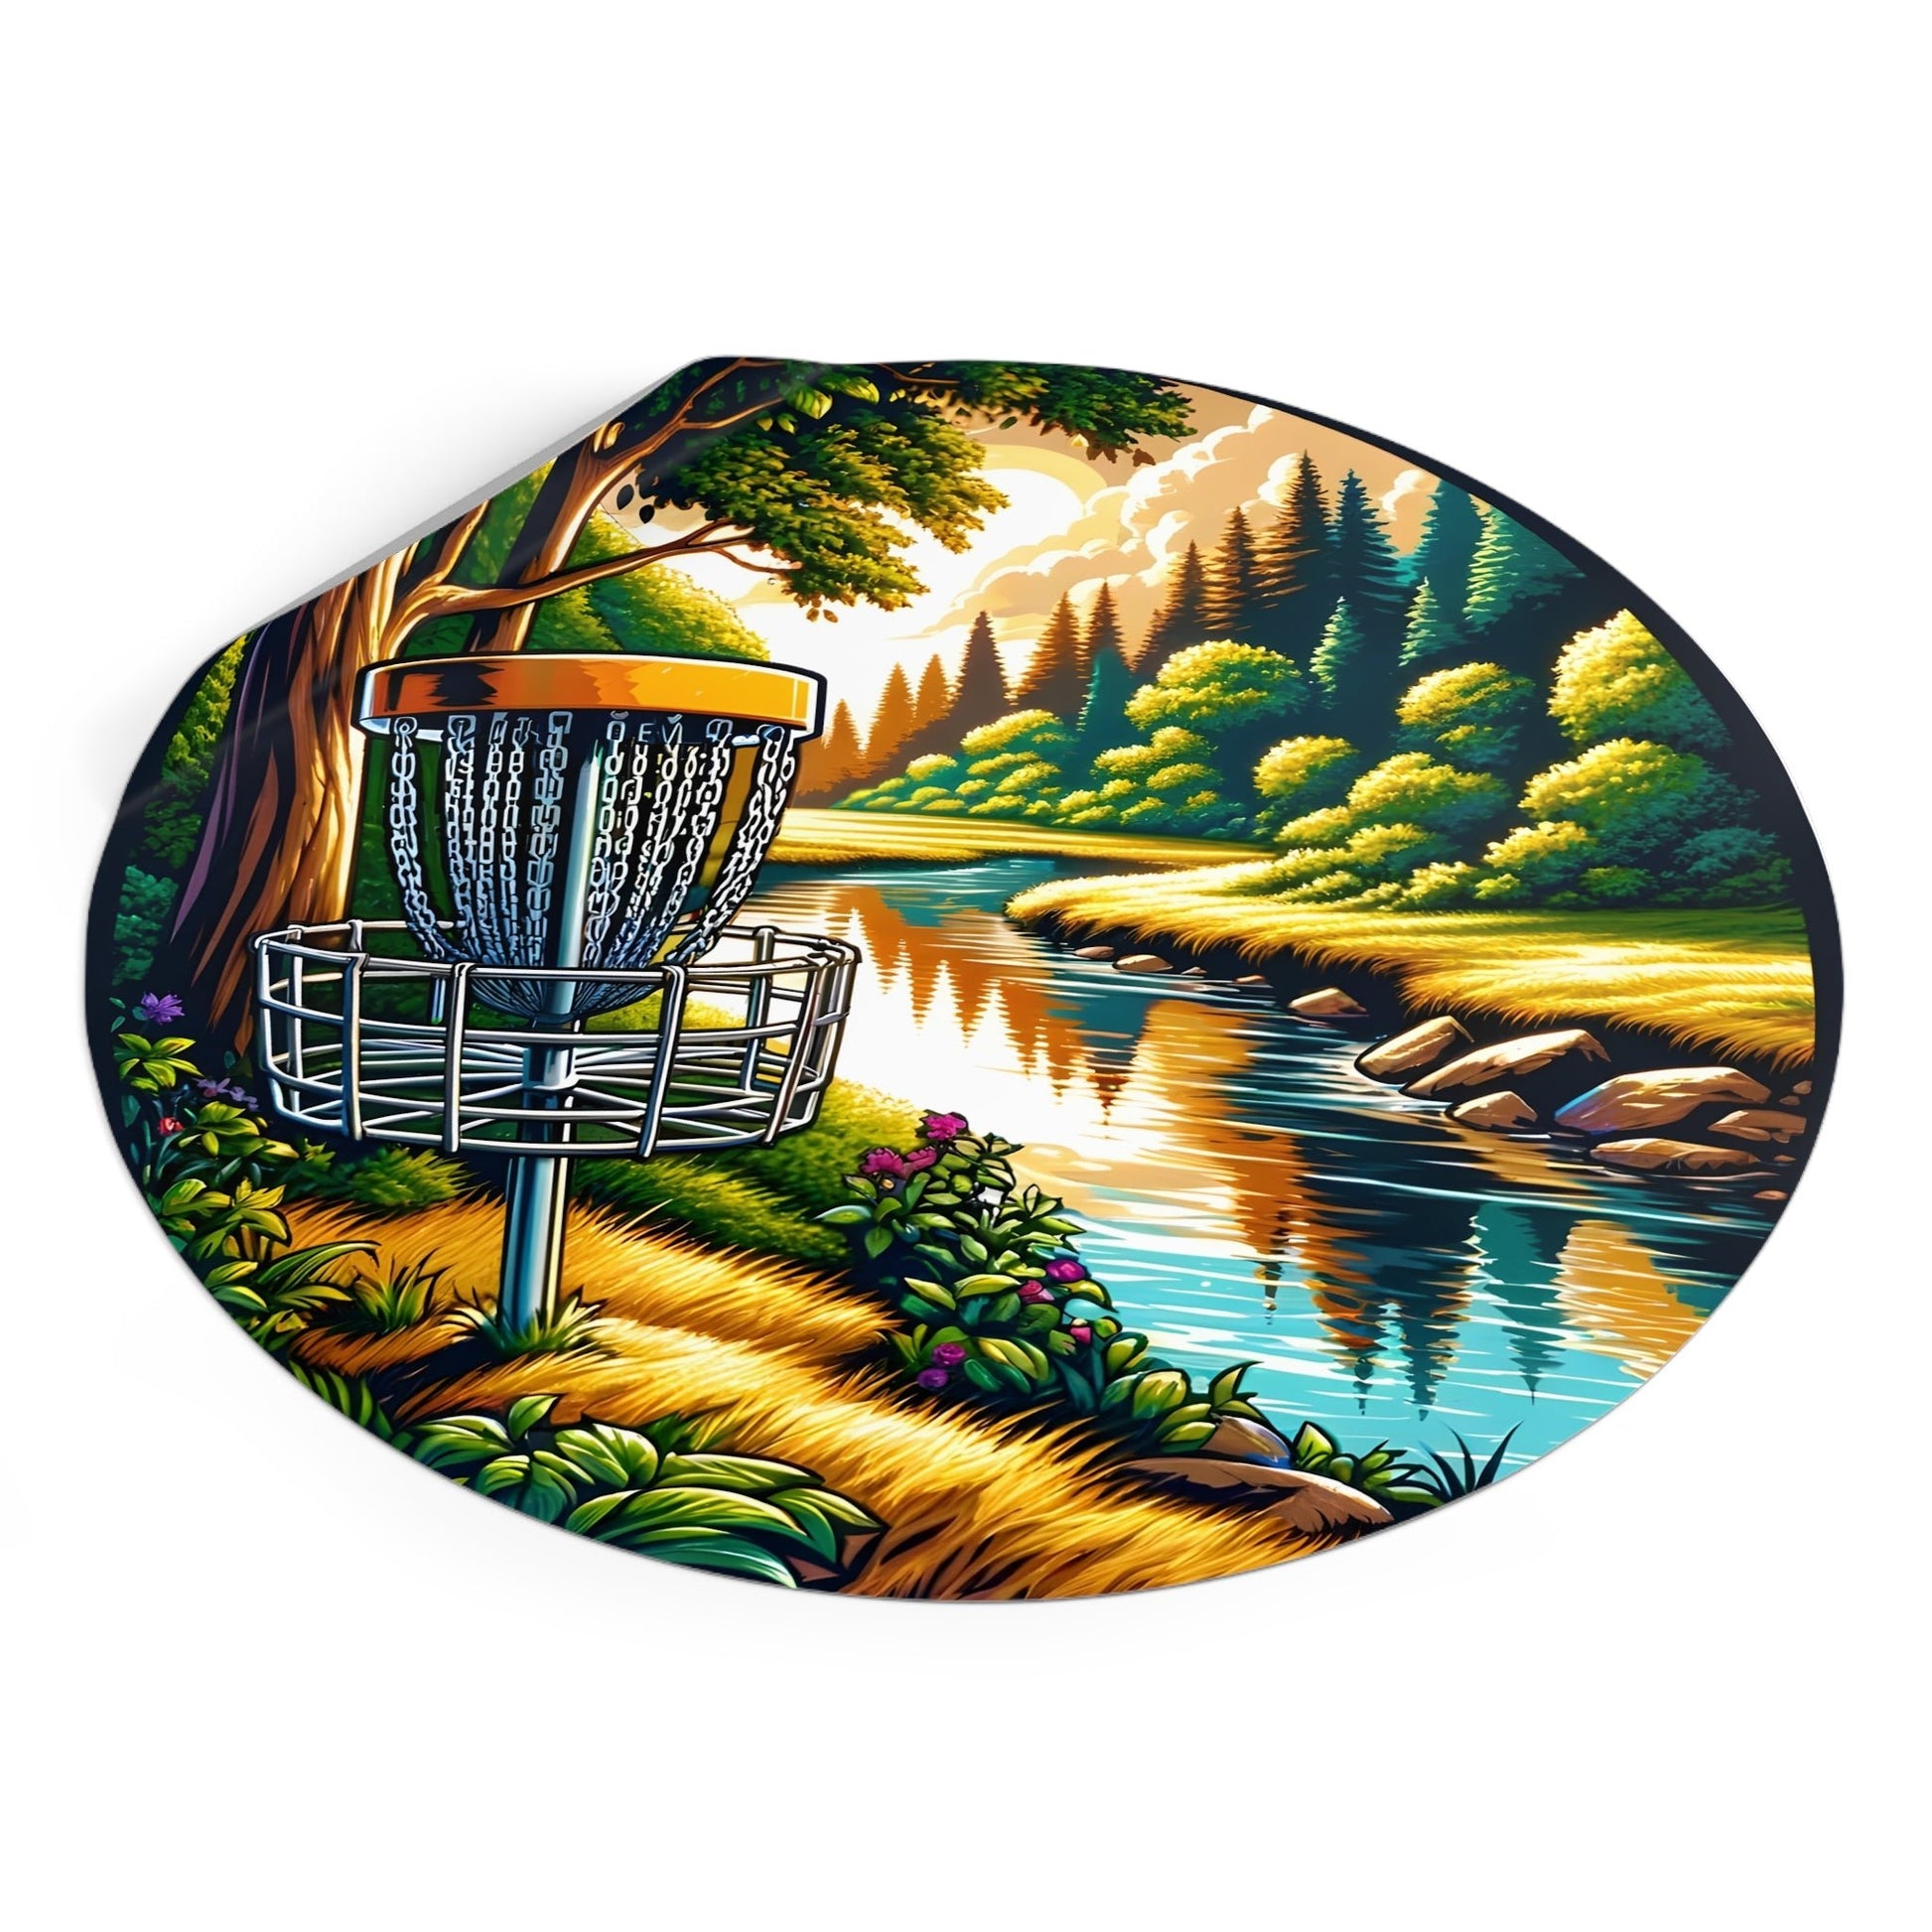 Disc Golf Sticker by Creek v2 - Round Vinyl Stickers - Quirky Goodies